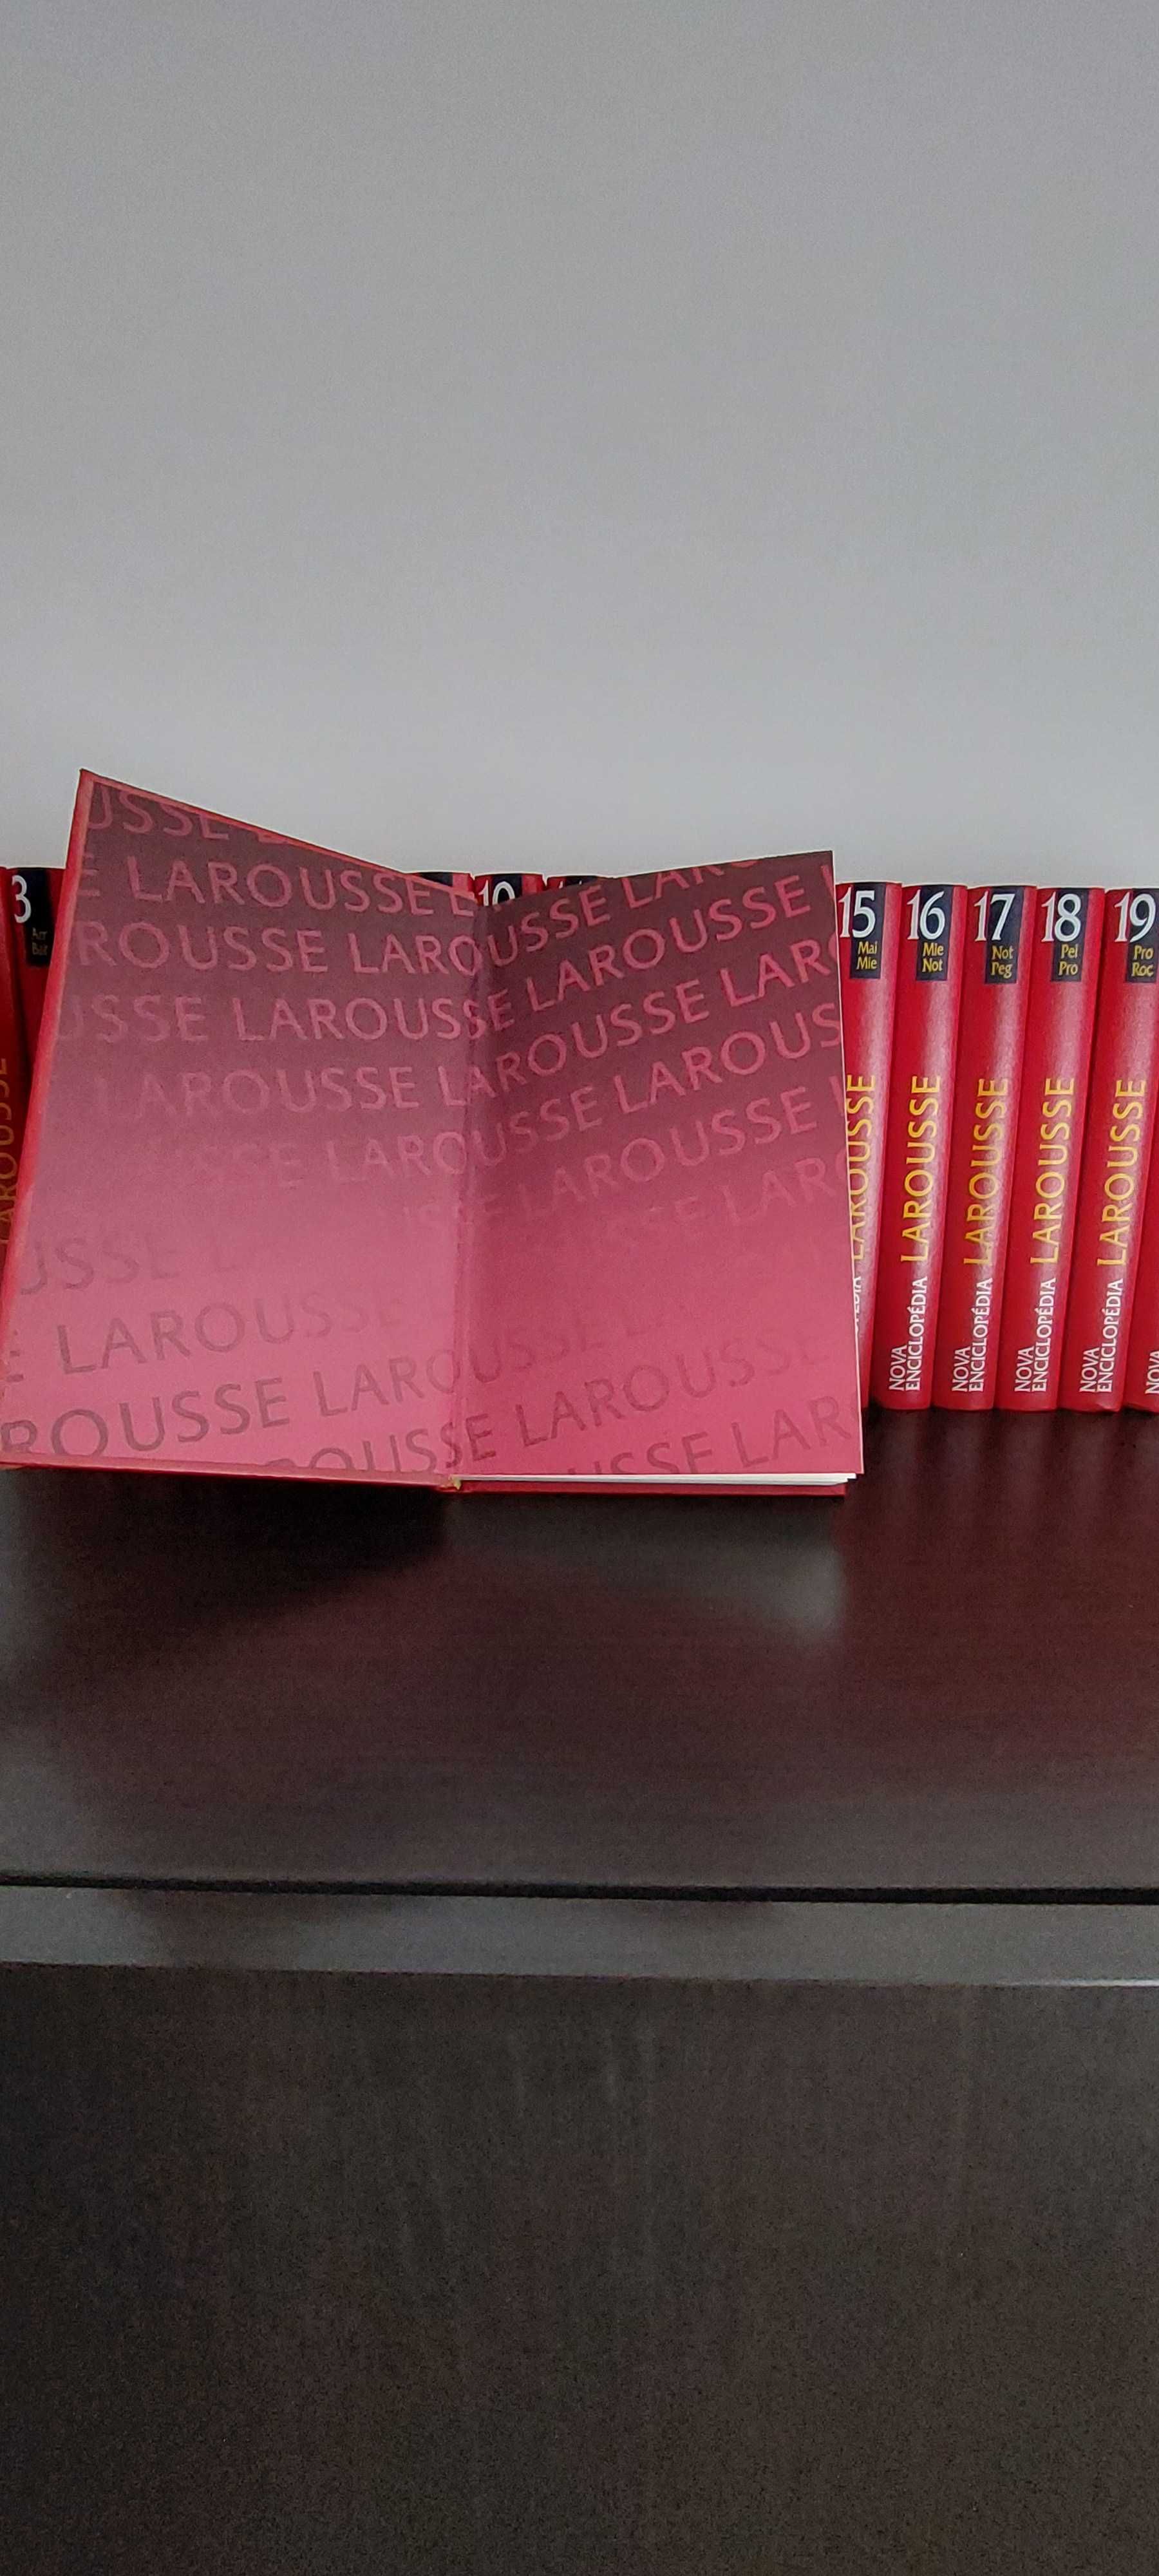 Nova Enciclopedia Larousse